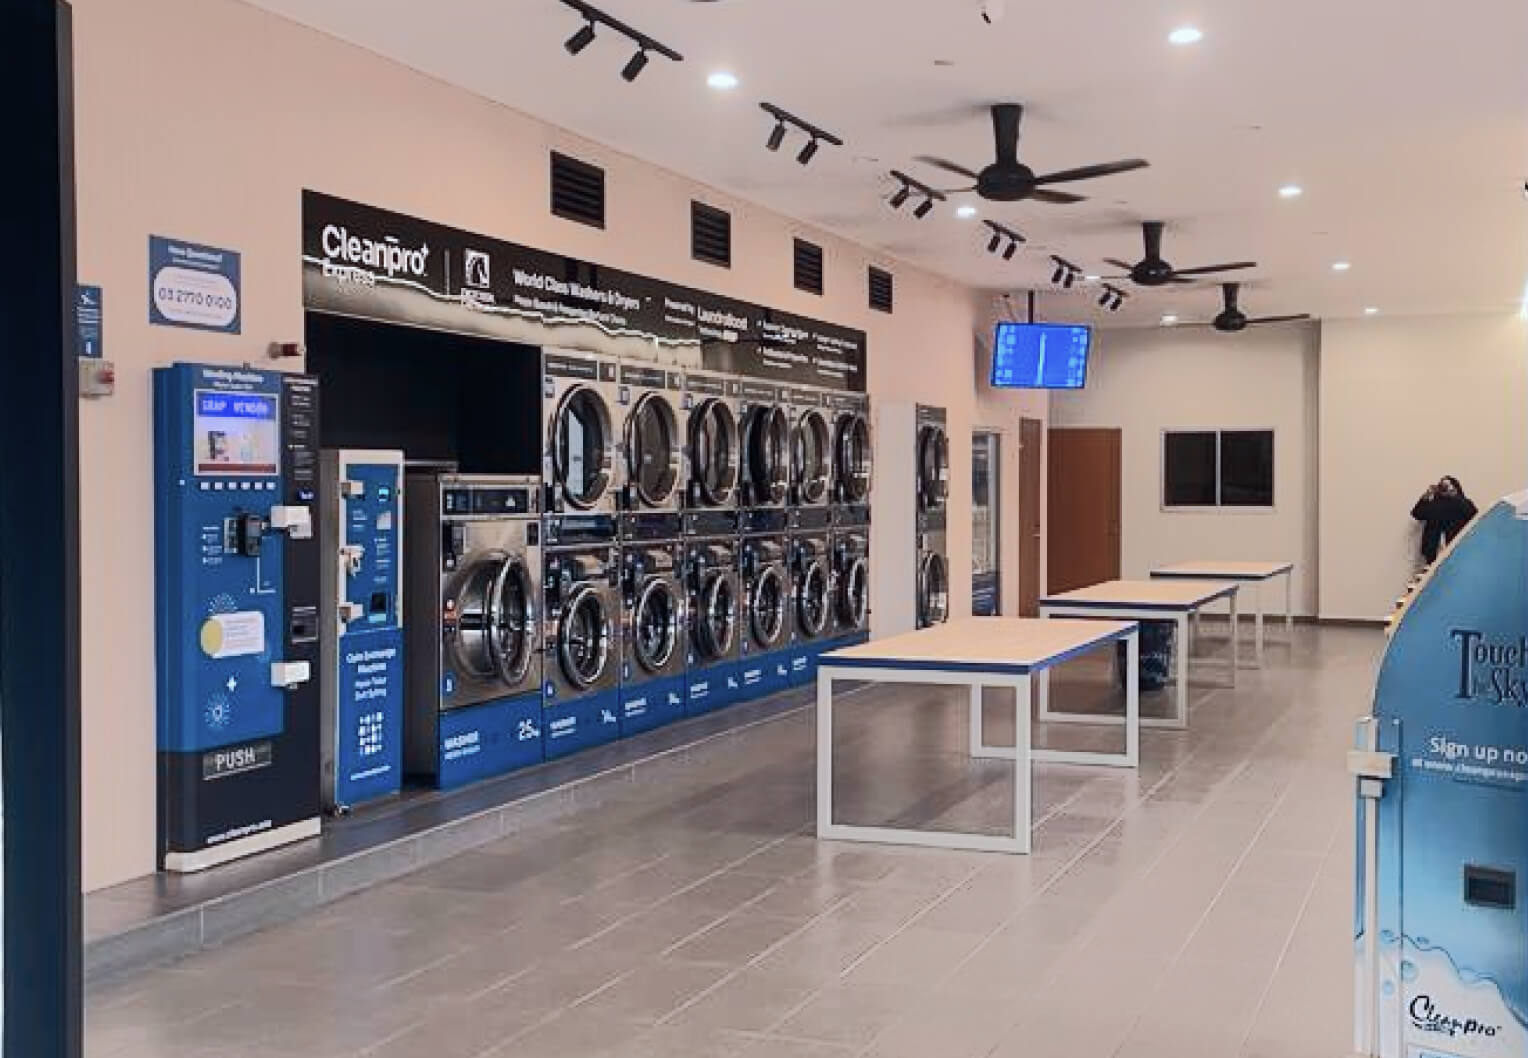 Cleanpro Express Bandar Kinrara soap vending machine and coin exchange machine